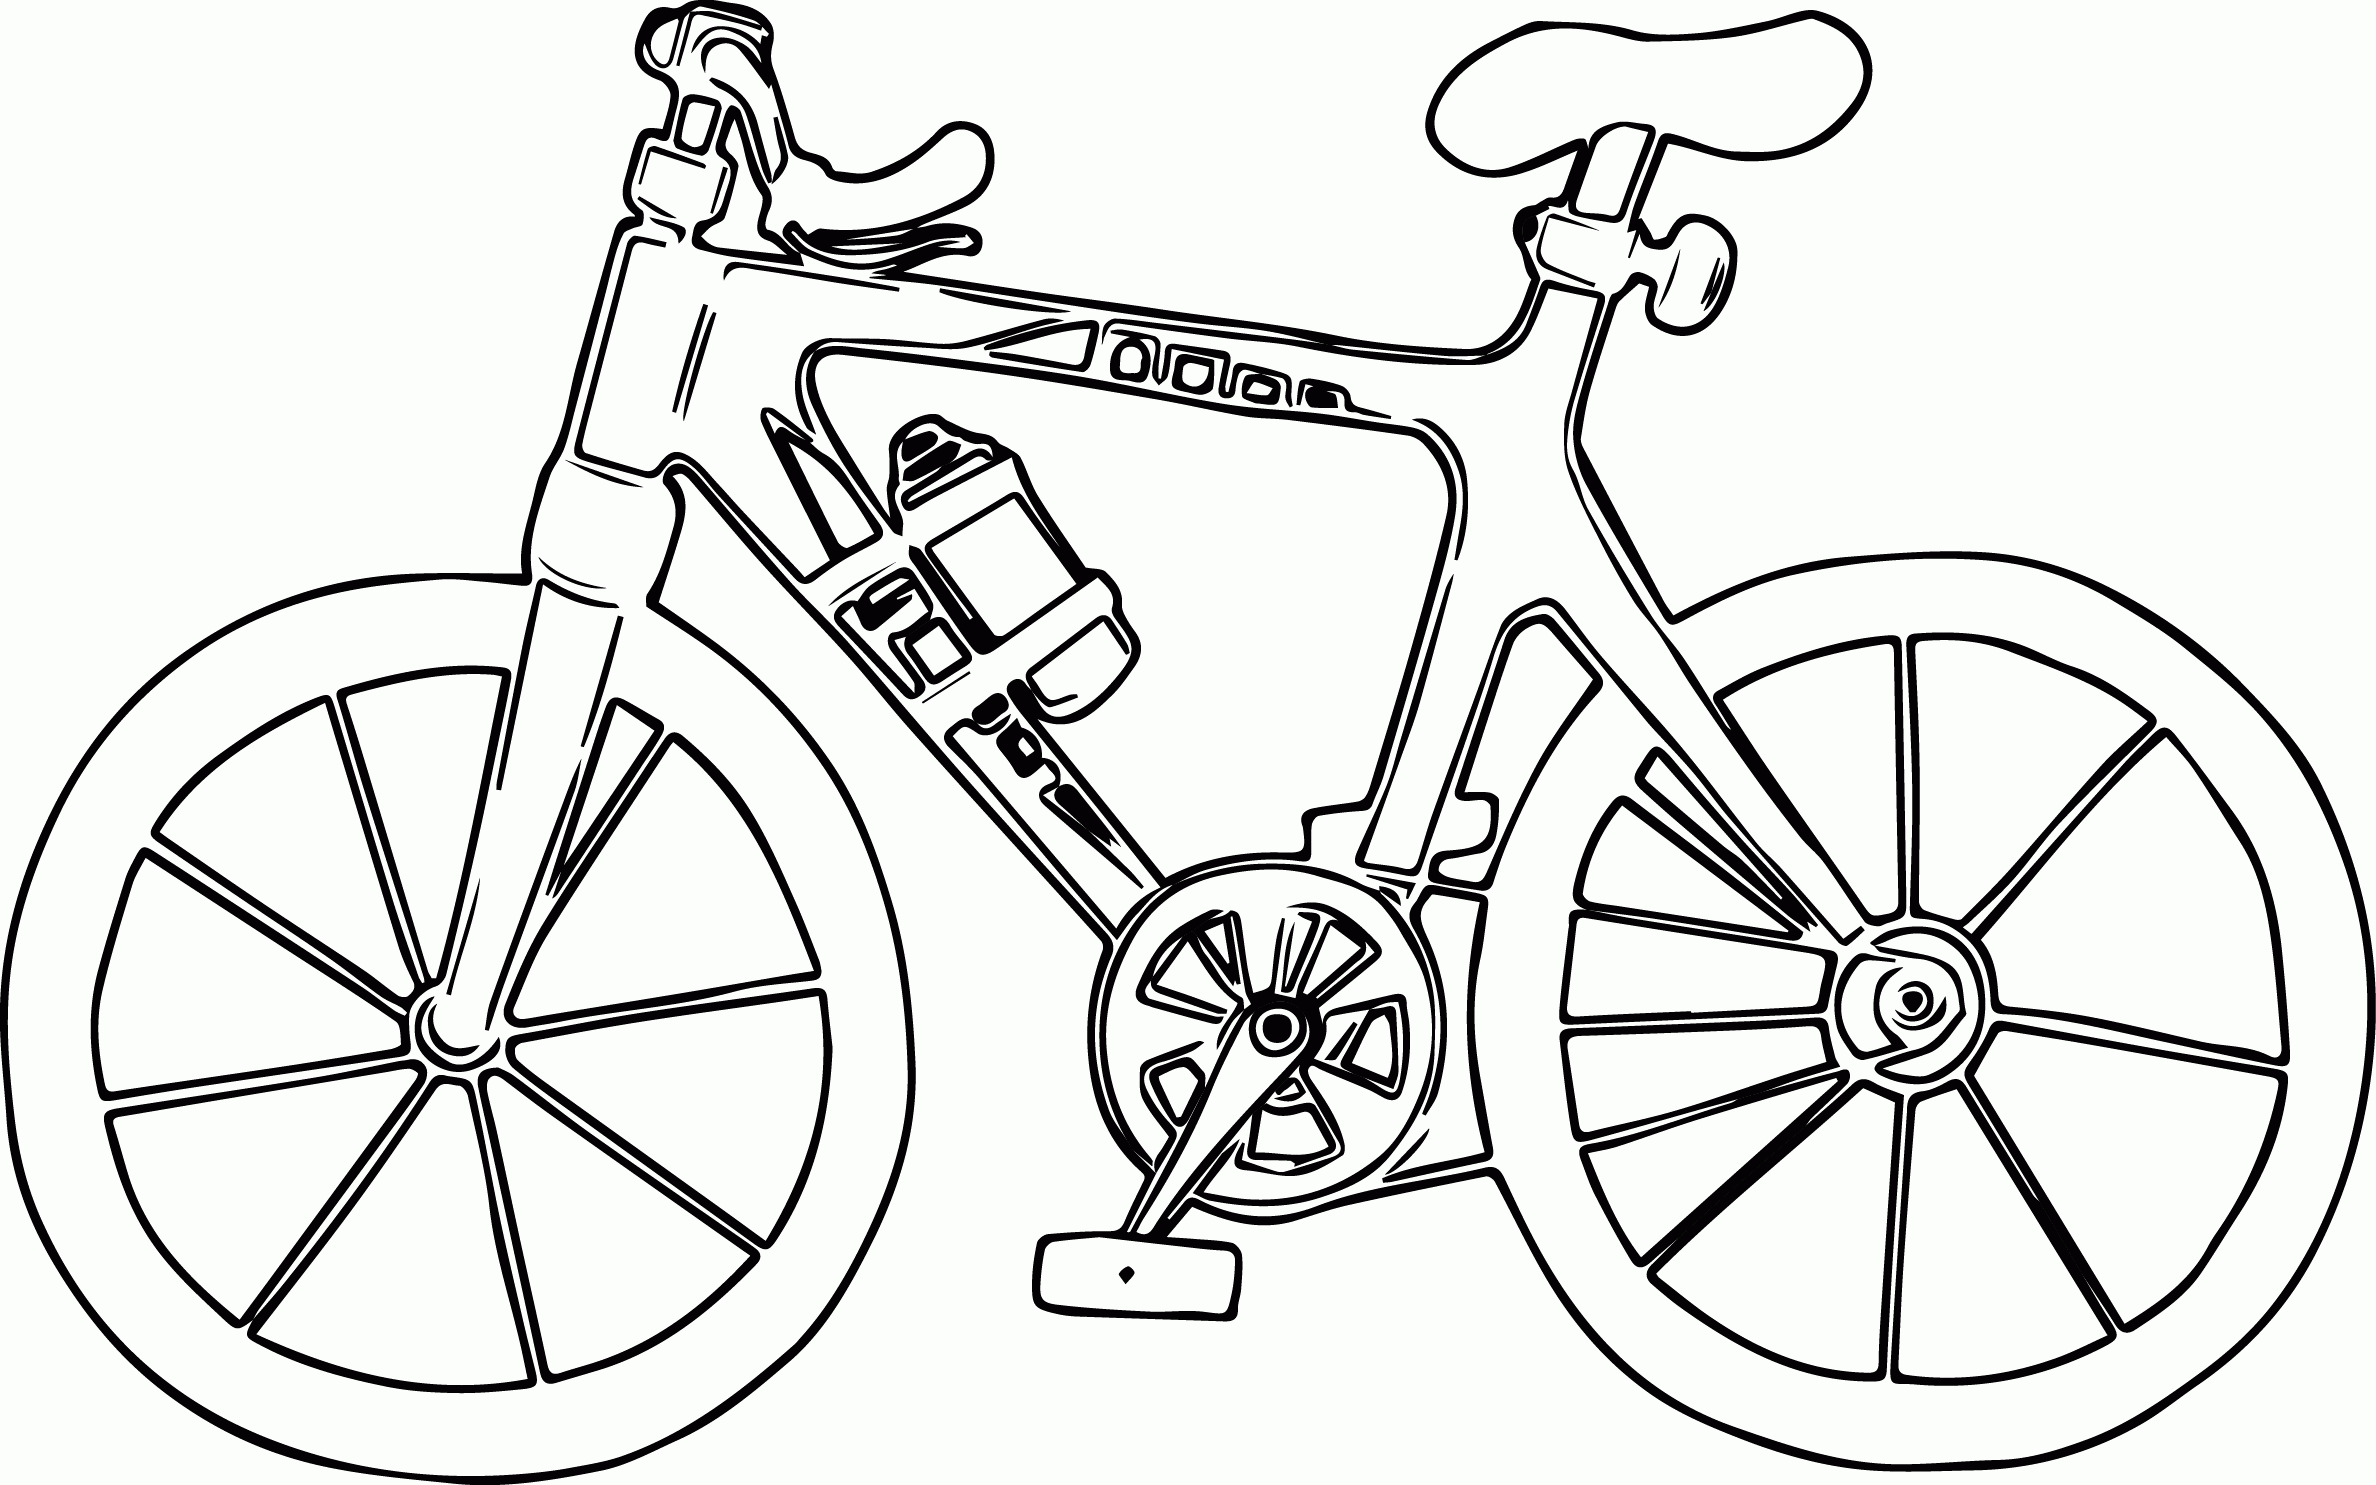 Bike Biycle Coloring Page 05 | Wecoloringpage